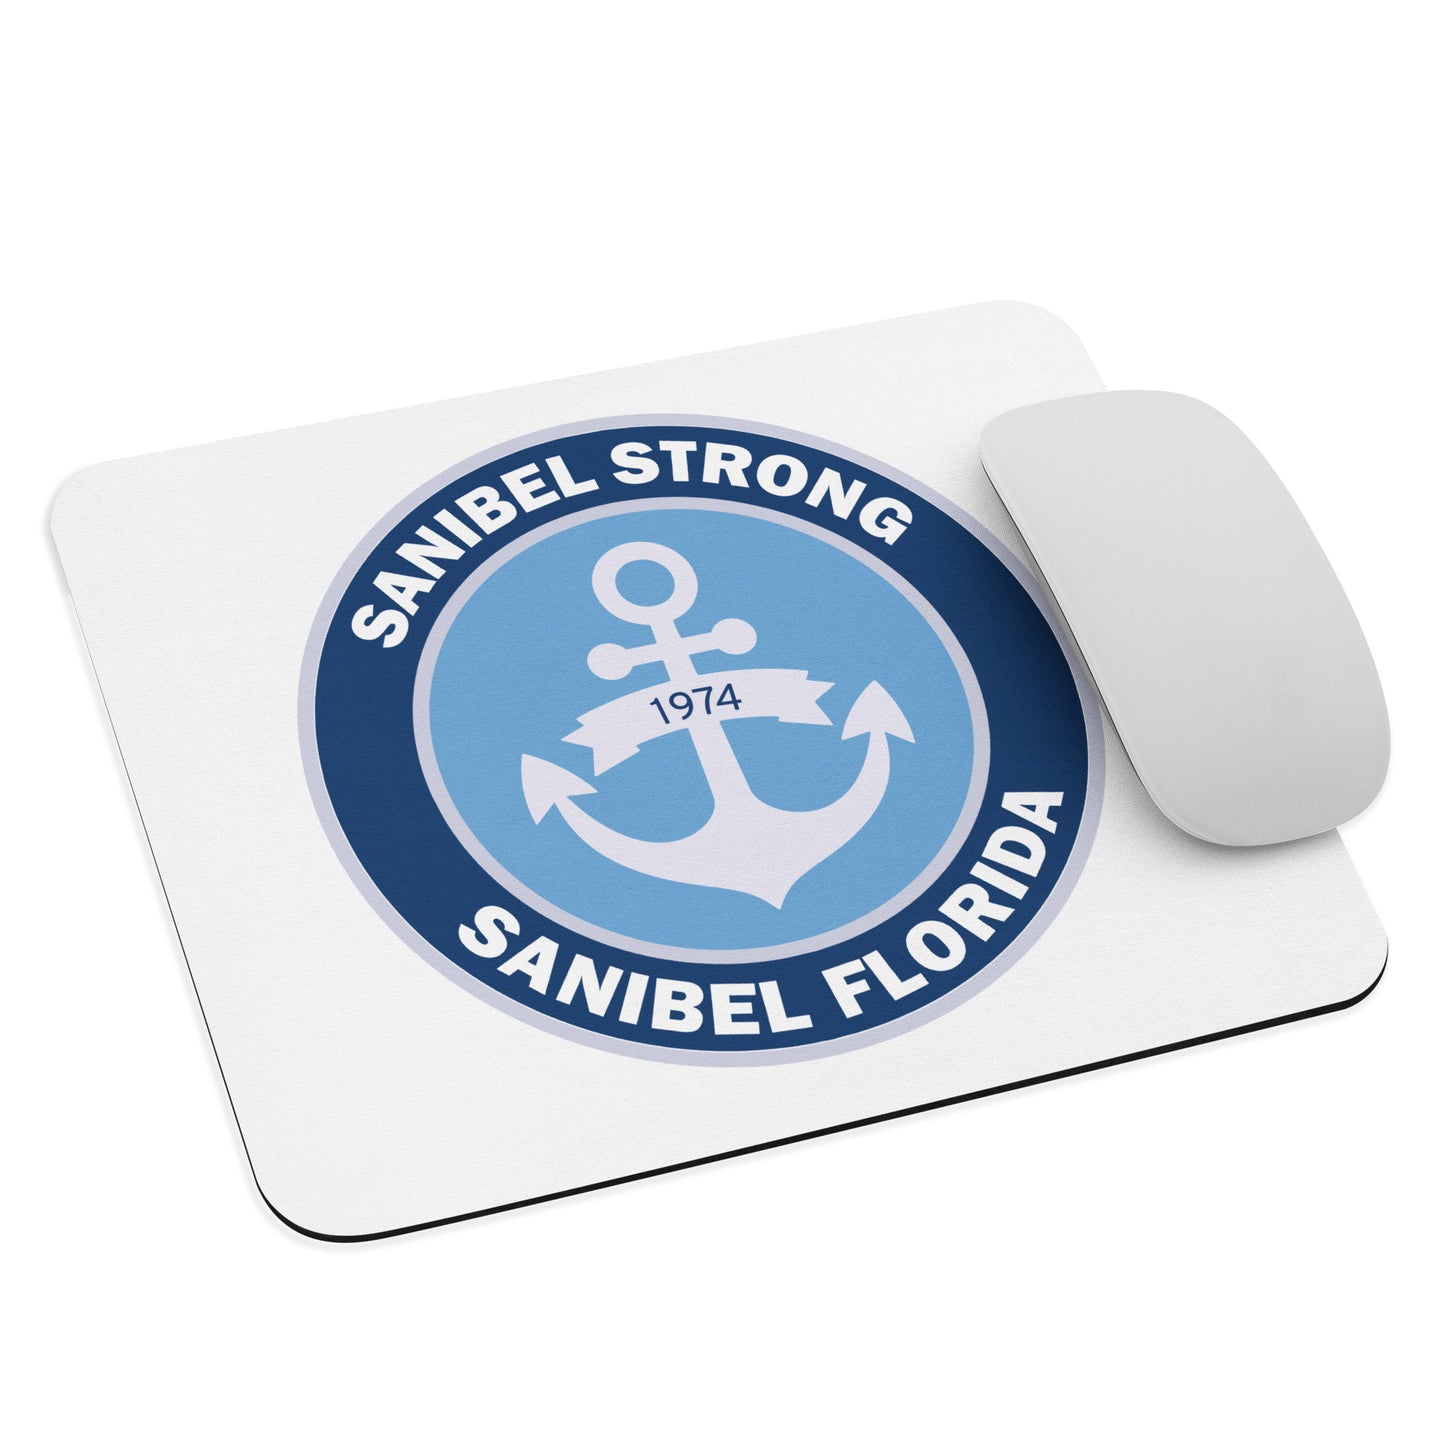 Sanibel Strong - Anchor Mouse pad